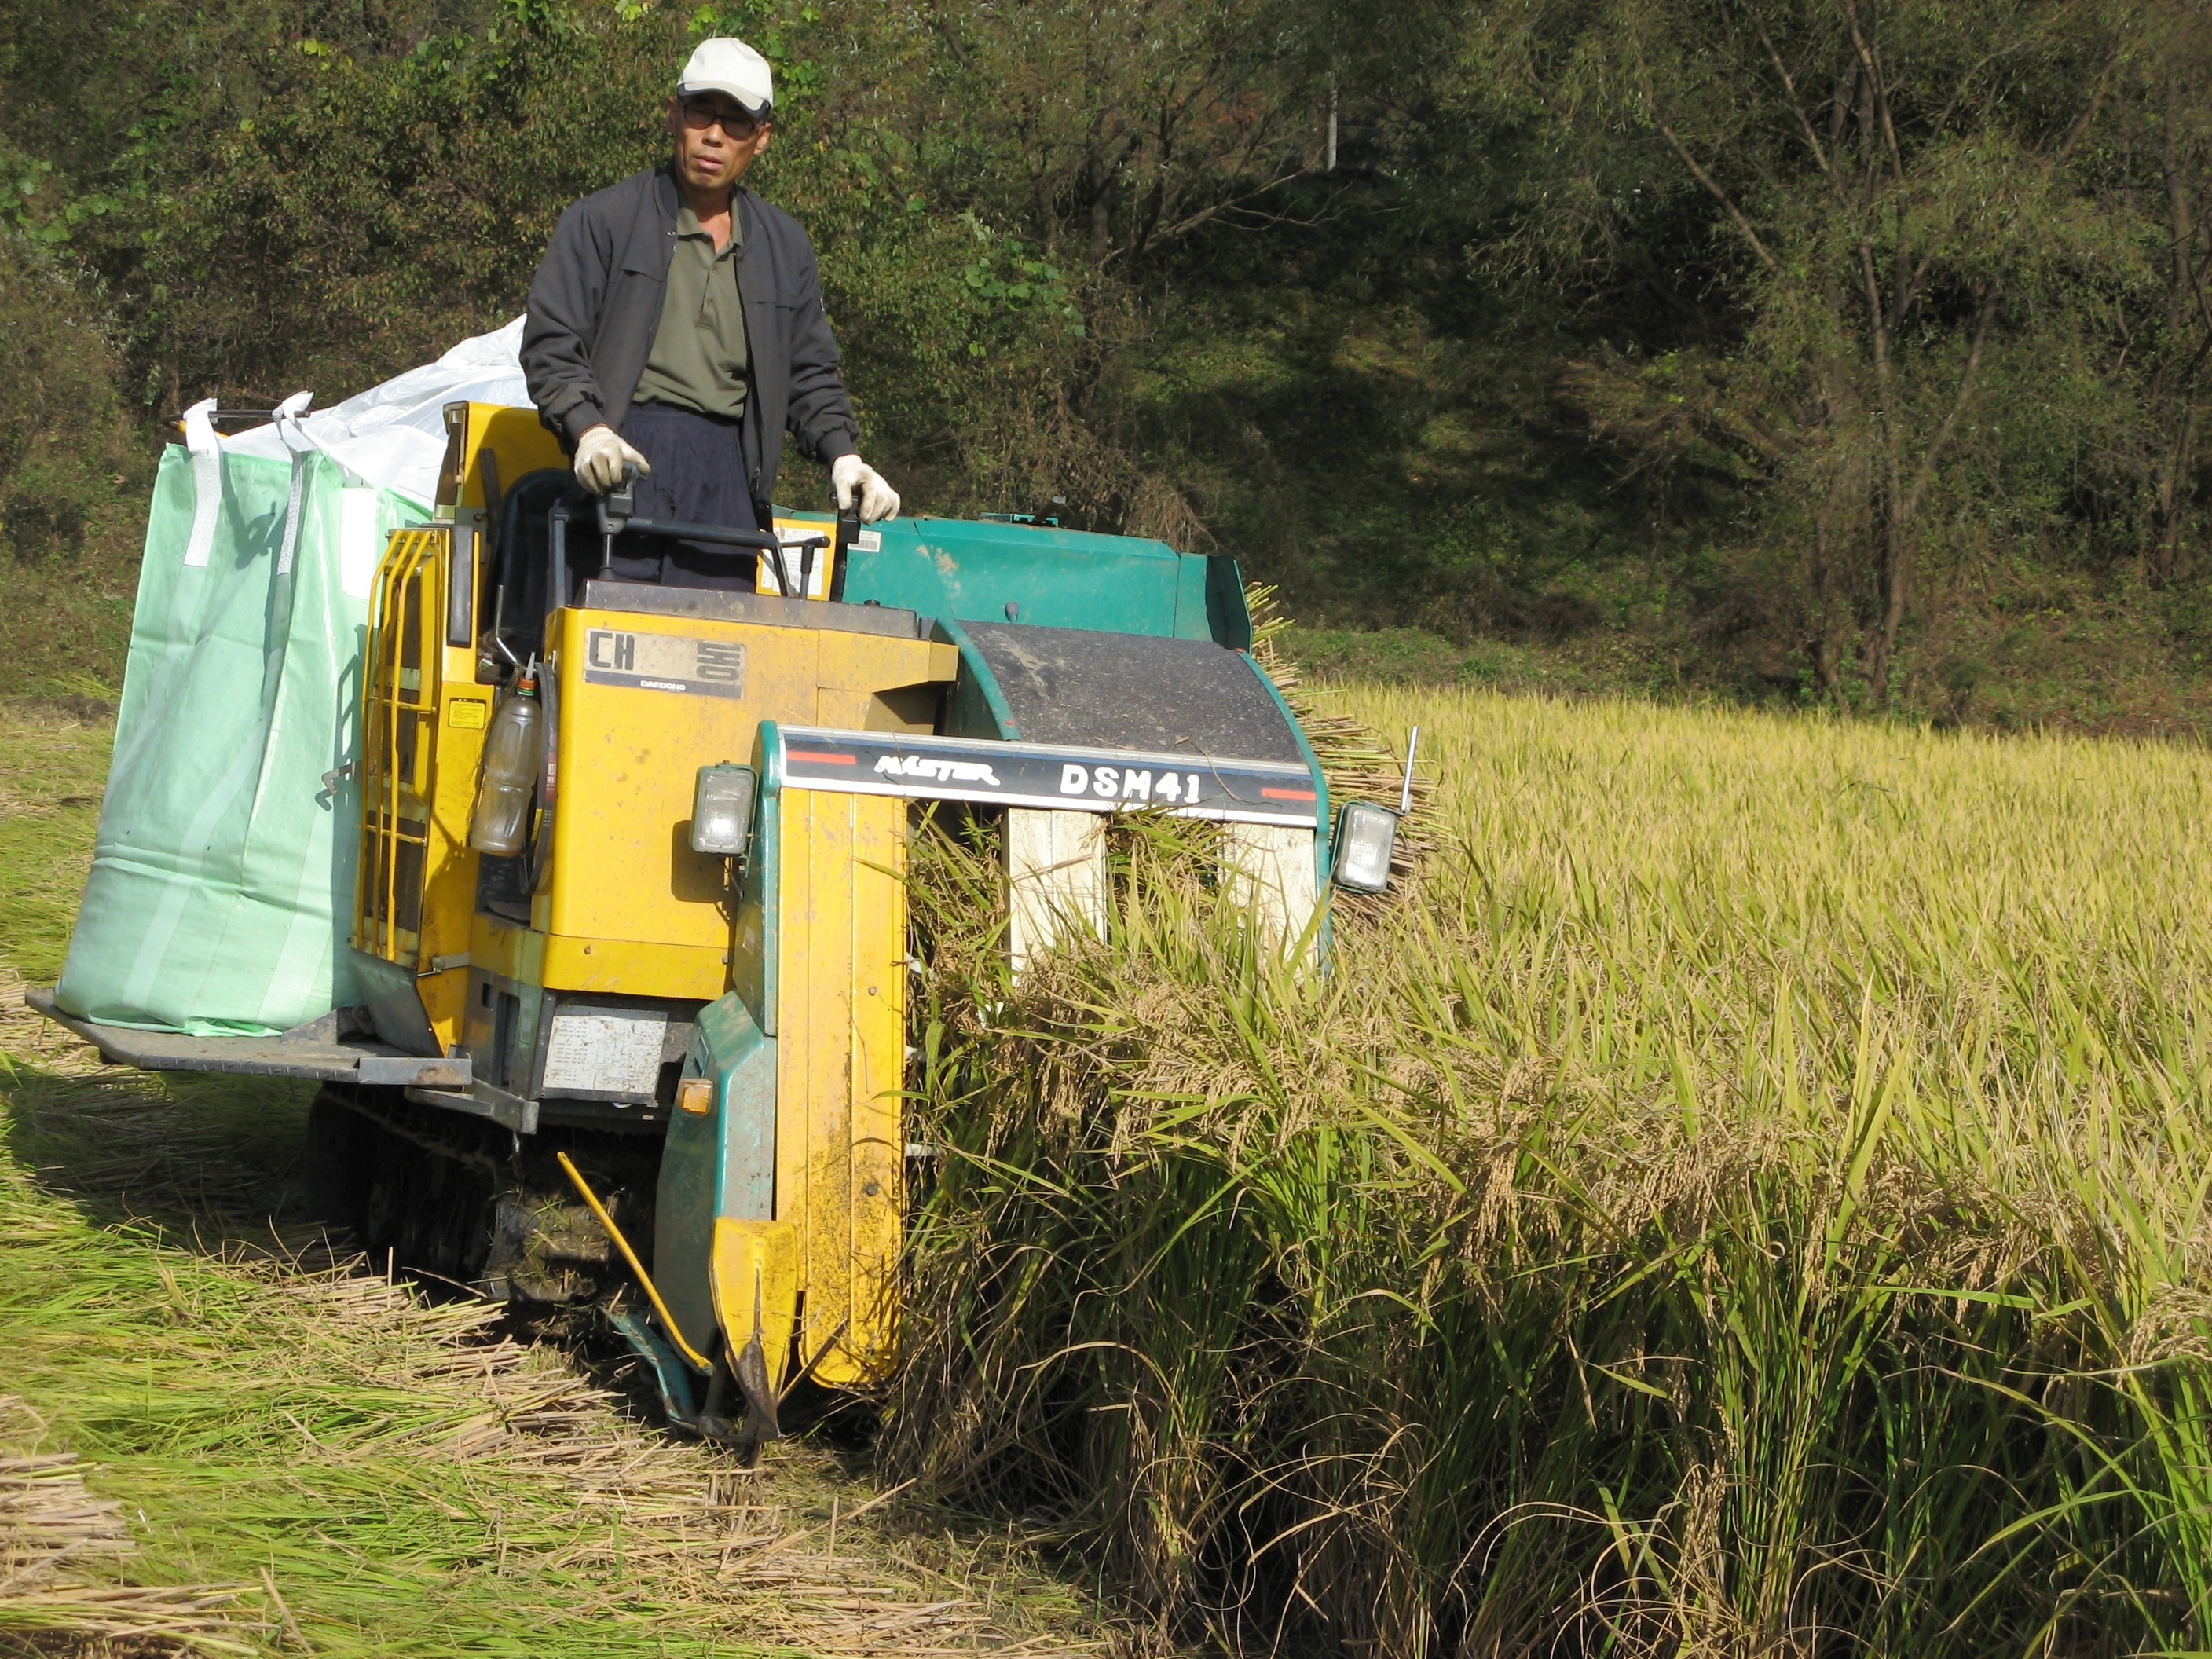 yellow dsm41 rice harvester